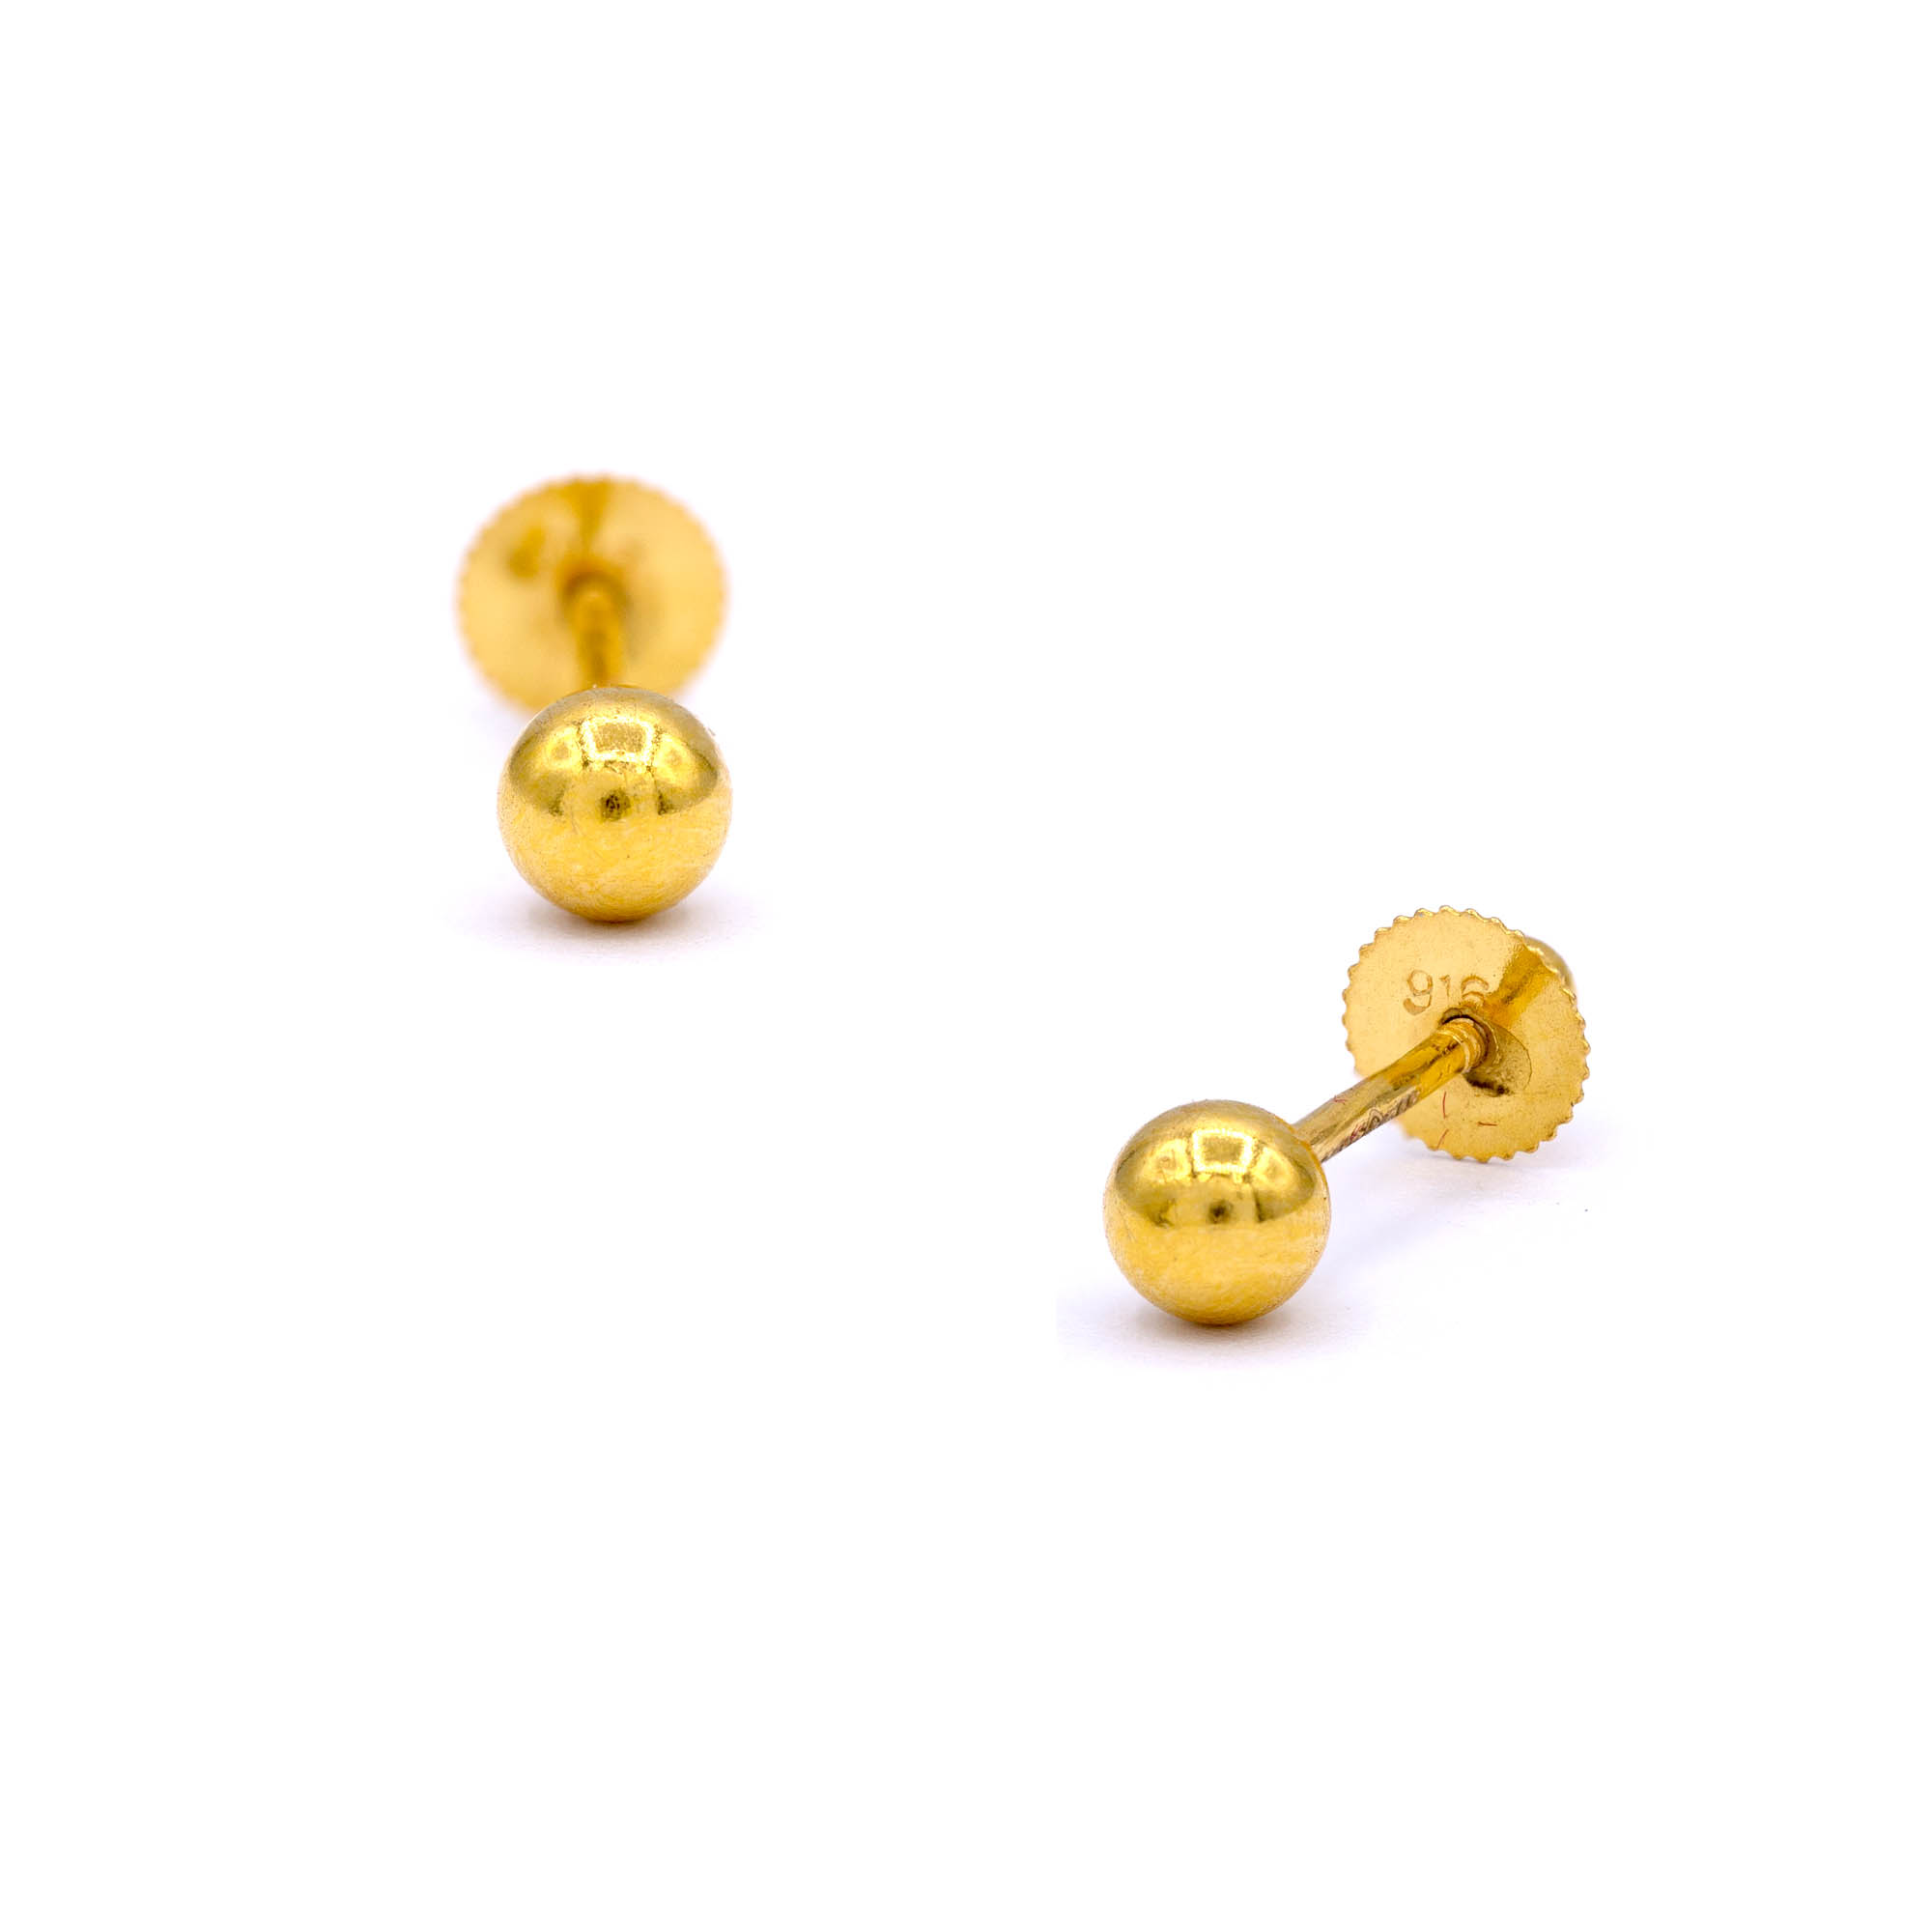 Size comparison for ball stud earrings Left 12.5mm Right 10mm | Instagram